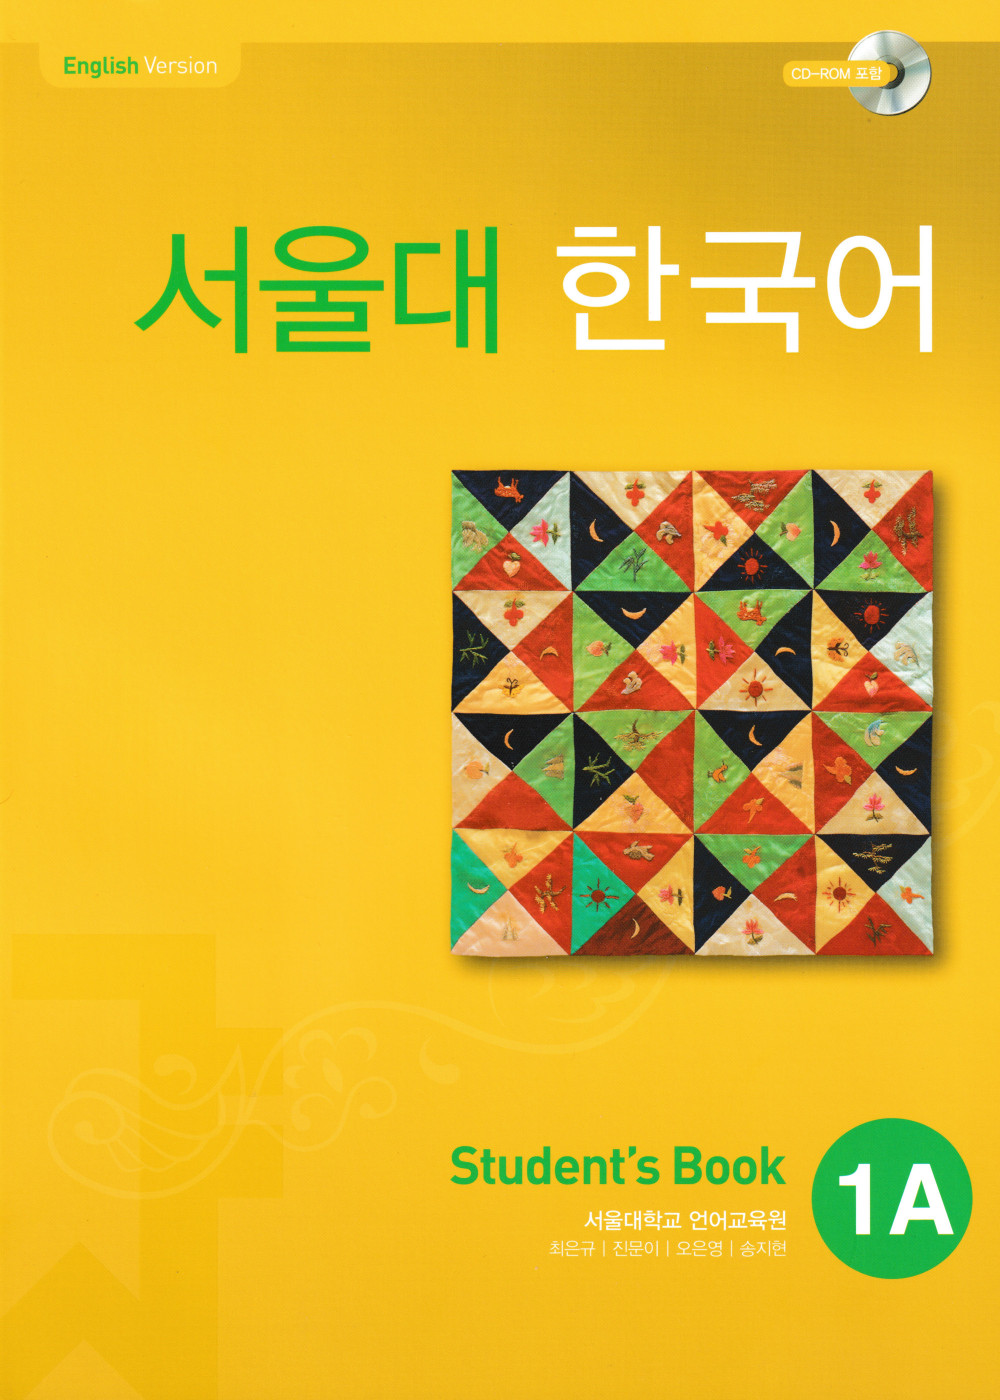 SNU Korean Student Book 1A - Seoul Hangugeo